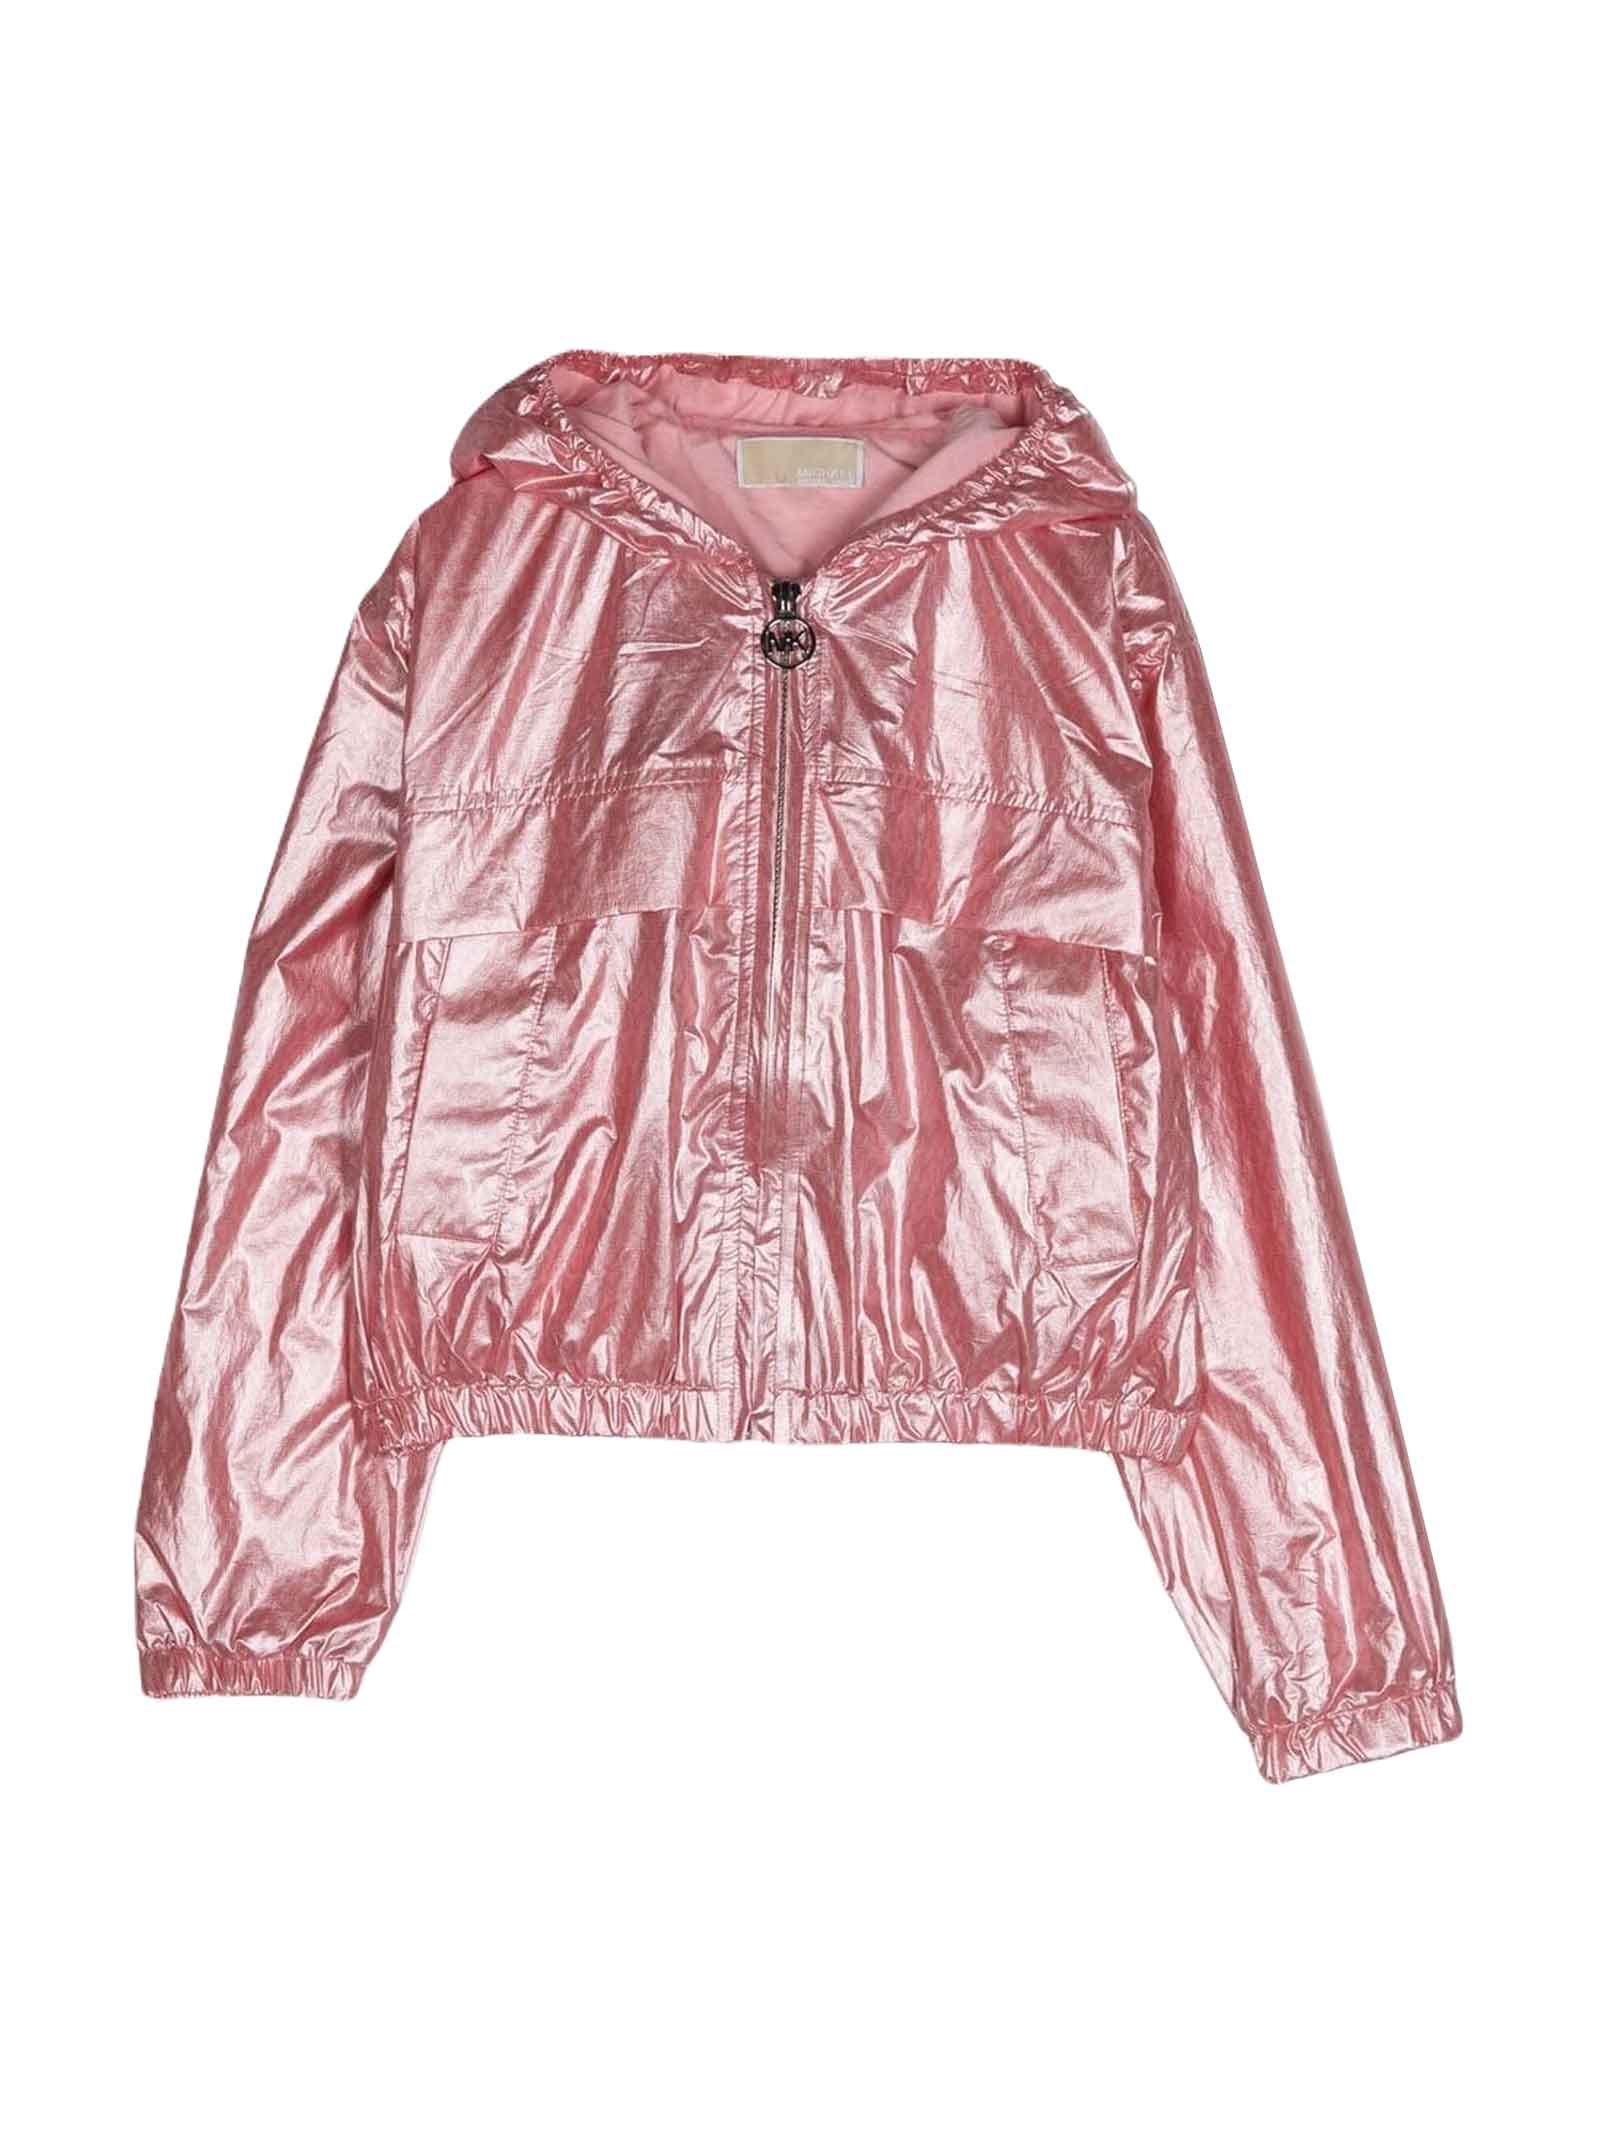 Michael Kors Pink Jacket Girl.